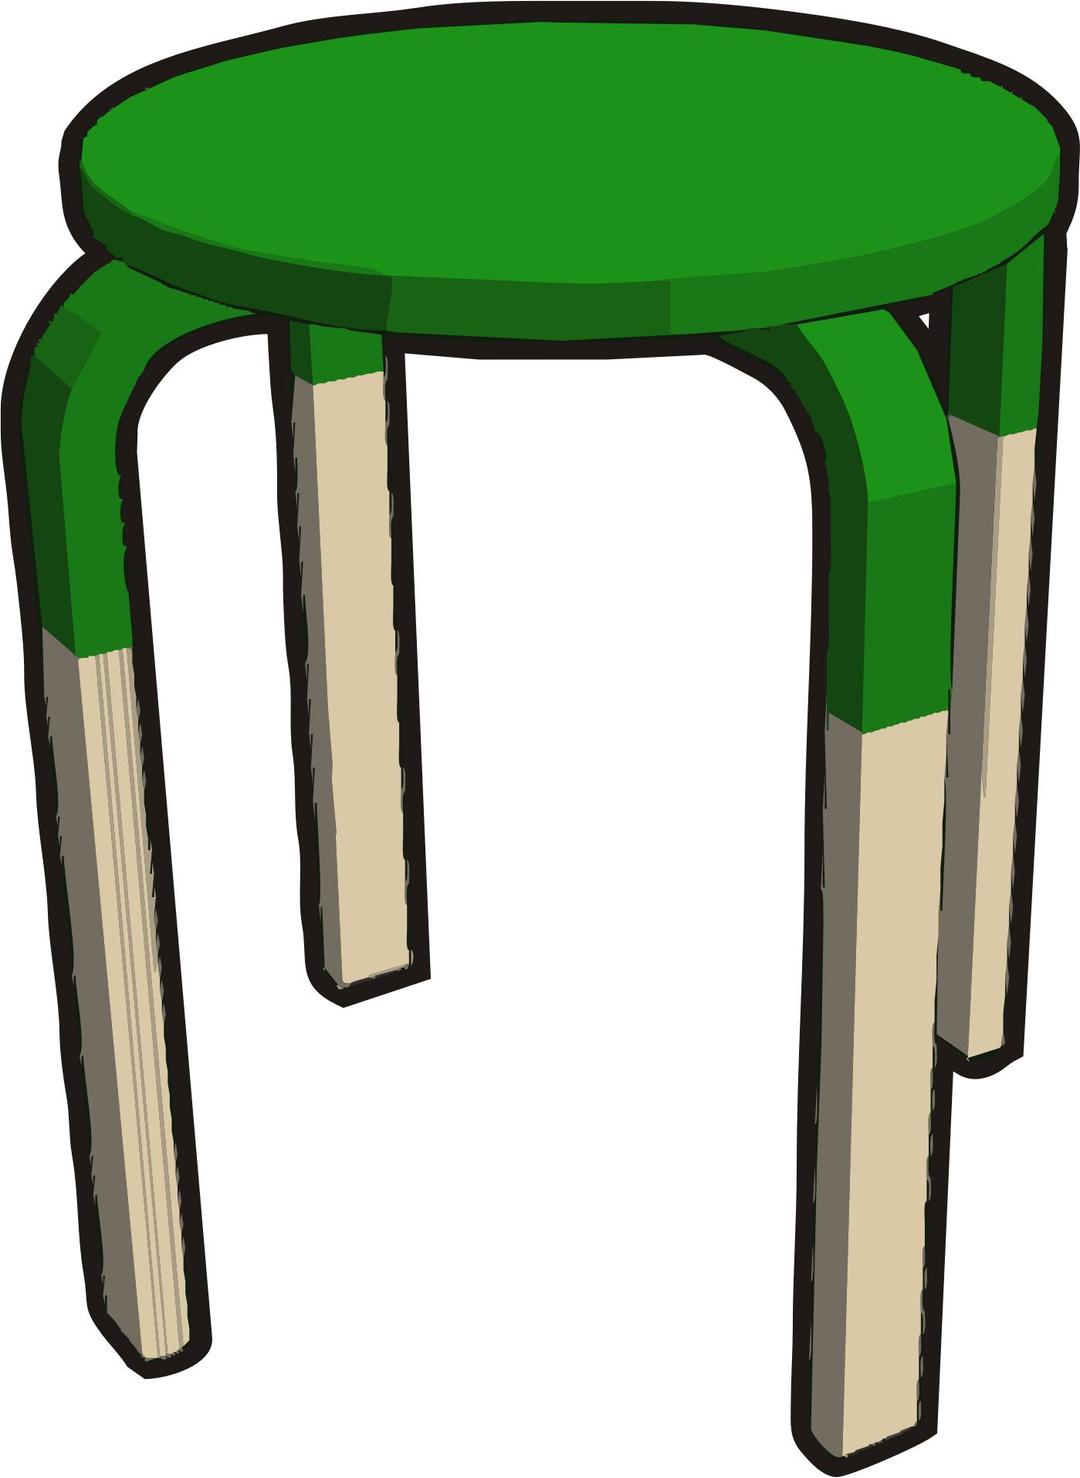 Ikea stuff - Frosta stool, half green png transparent